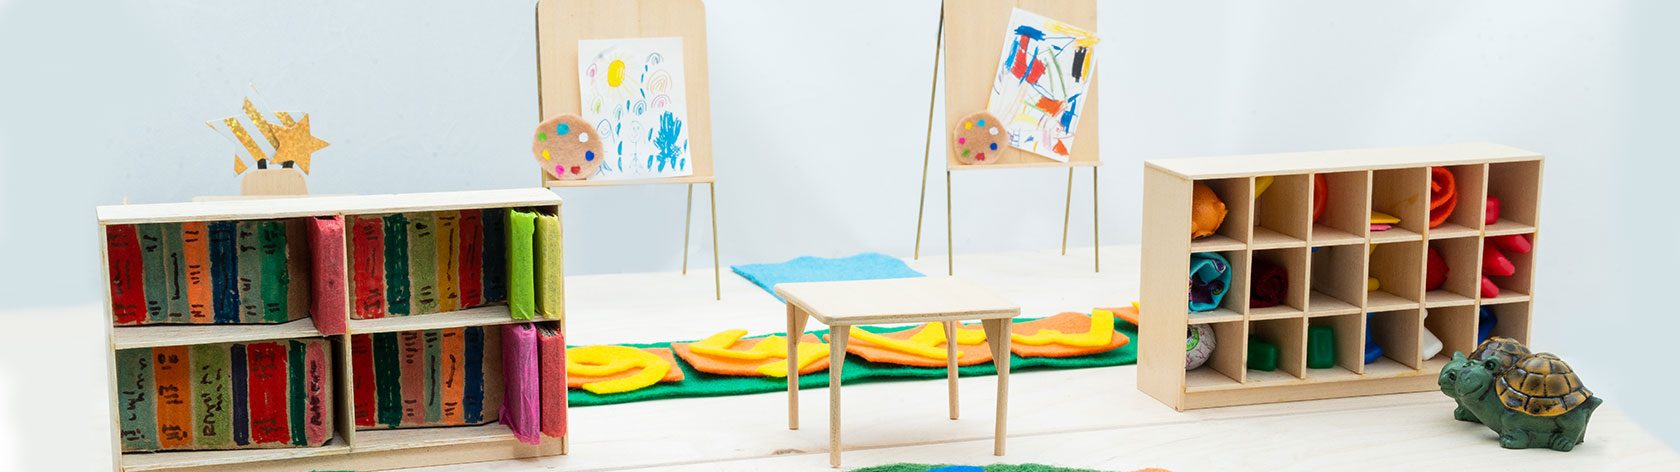 Miniture set up of a classroom